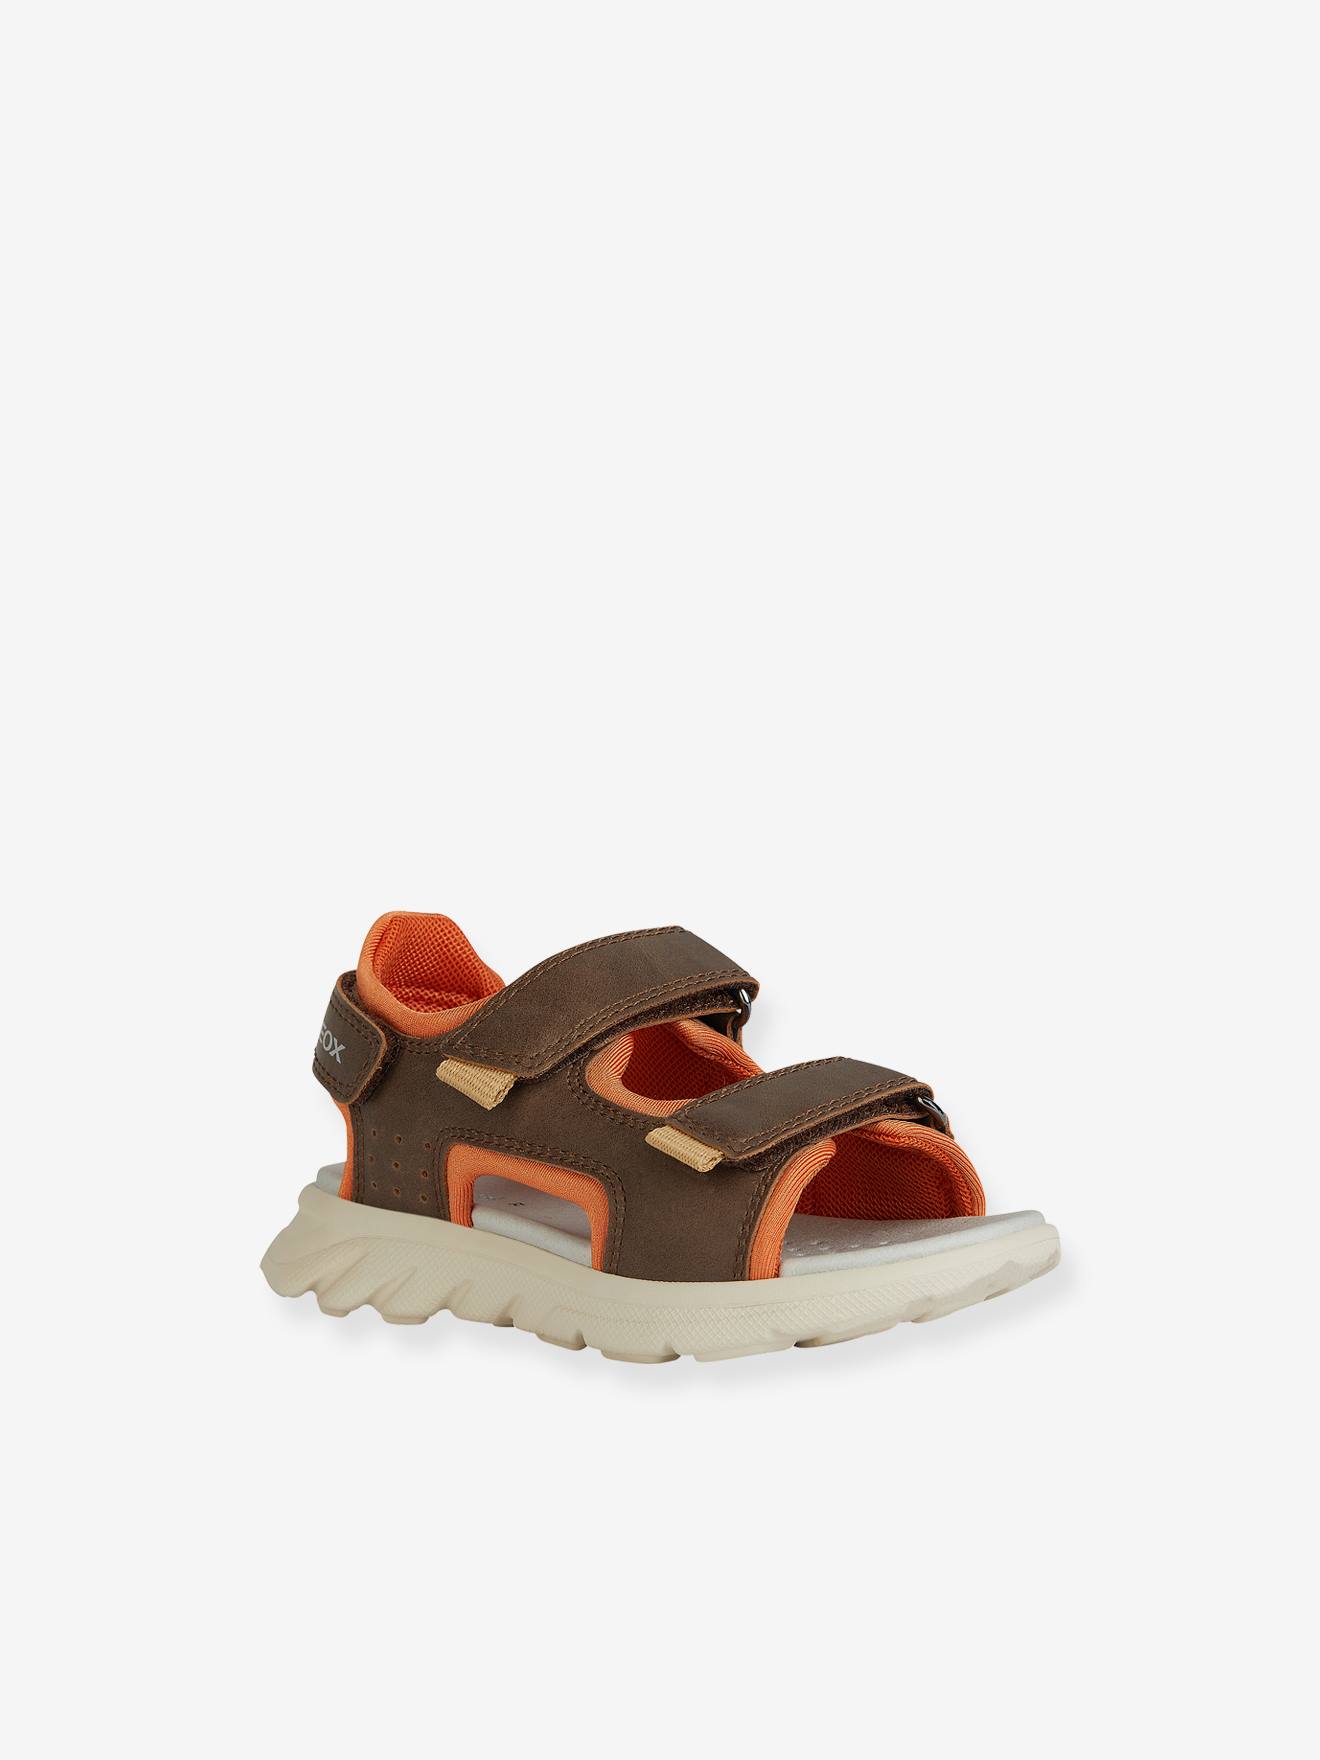 Sandals for Children, J45F1A Airadyum Boy by GEOX(r) brown